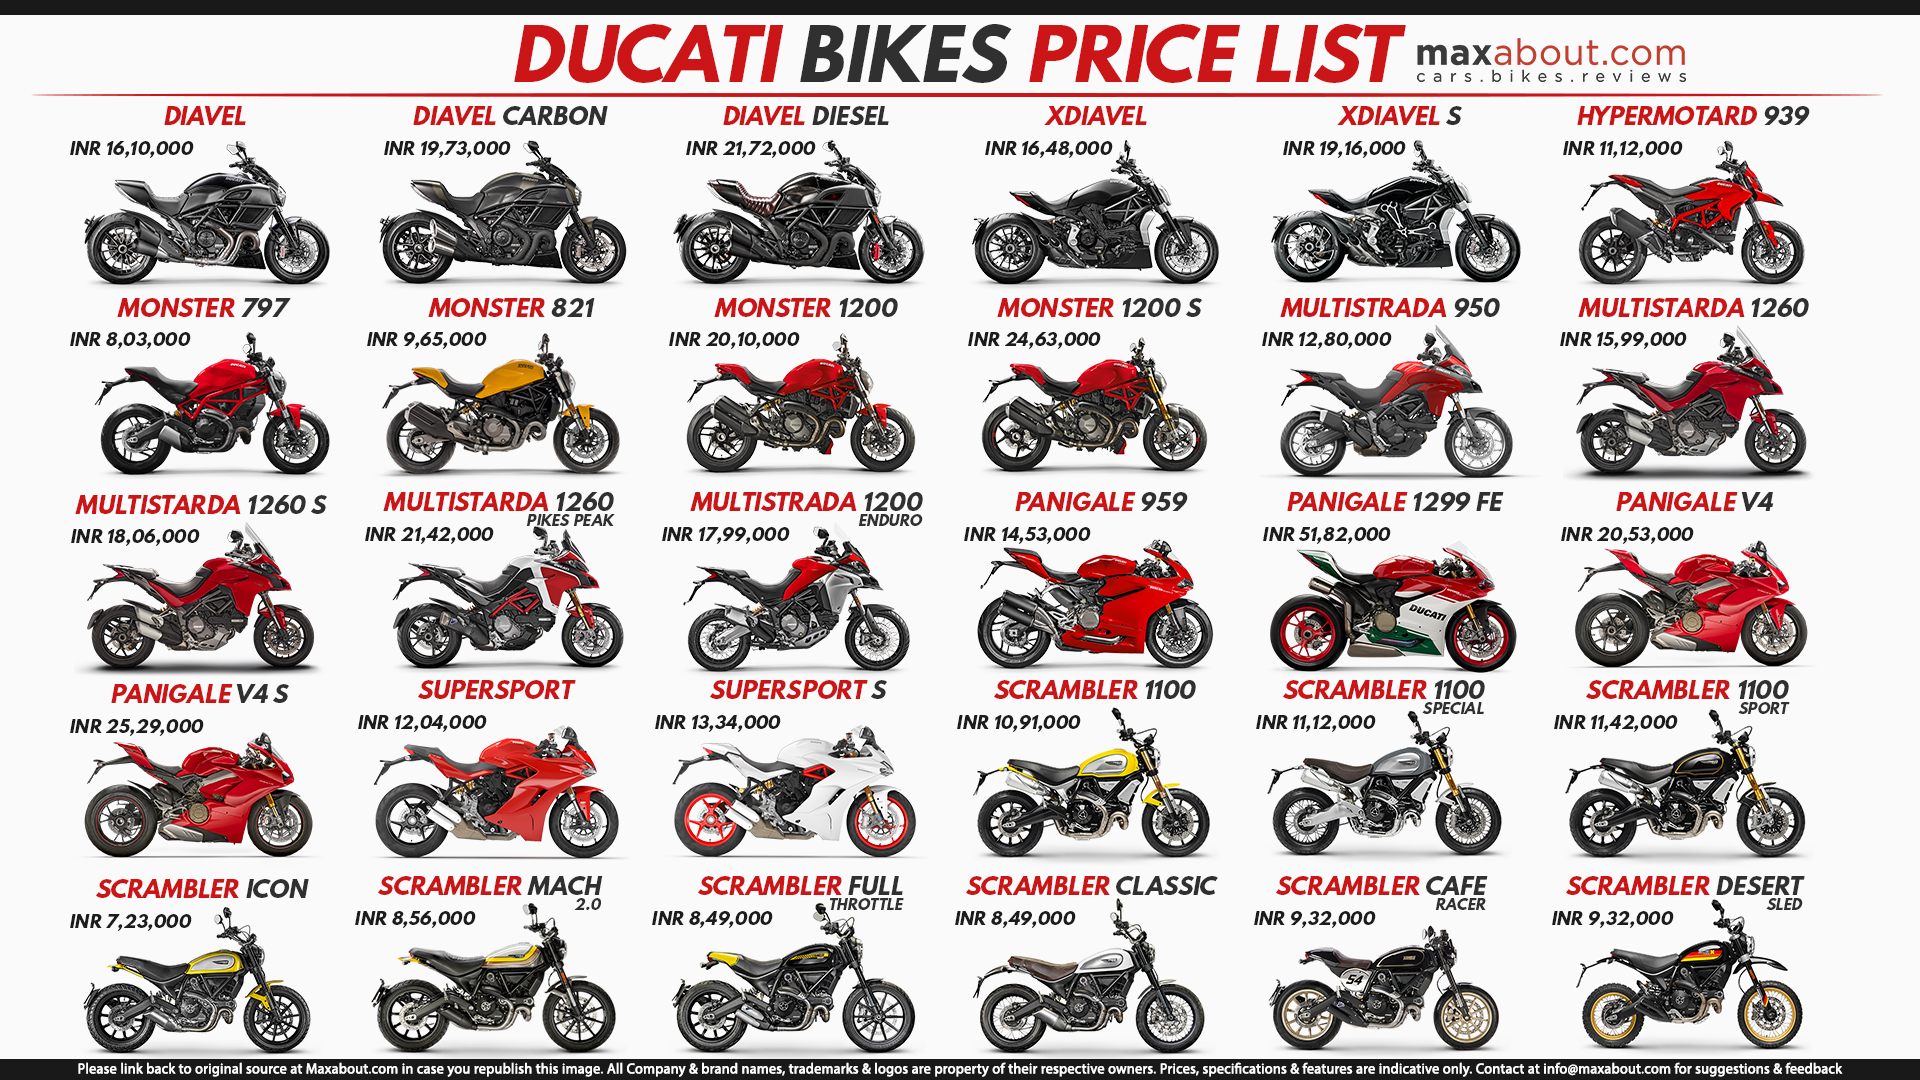 Ducati Bikes Price List in India (Full Lineup)